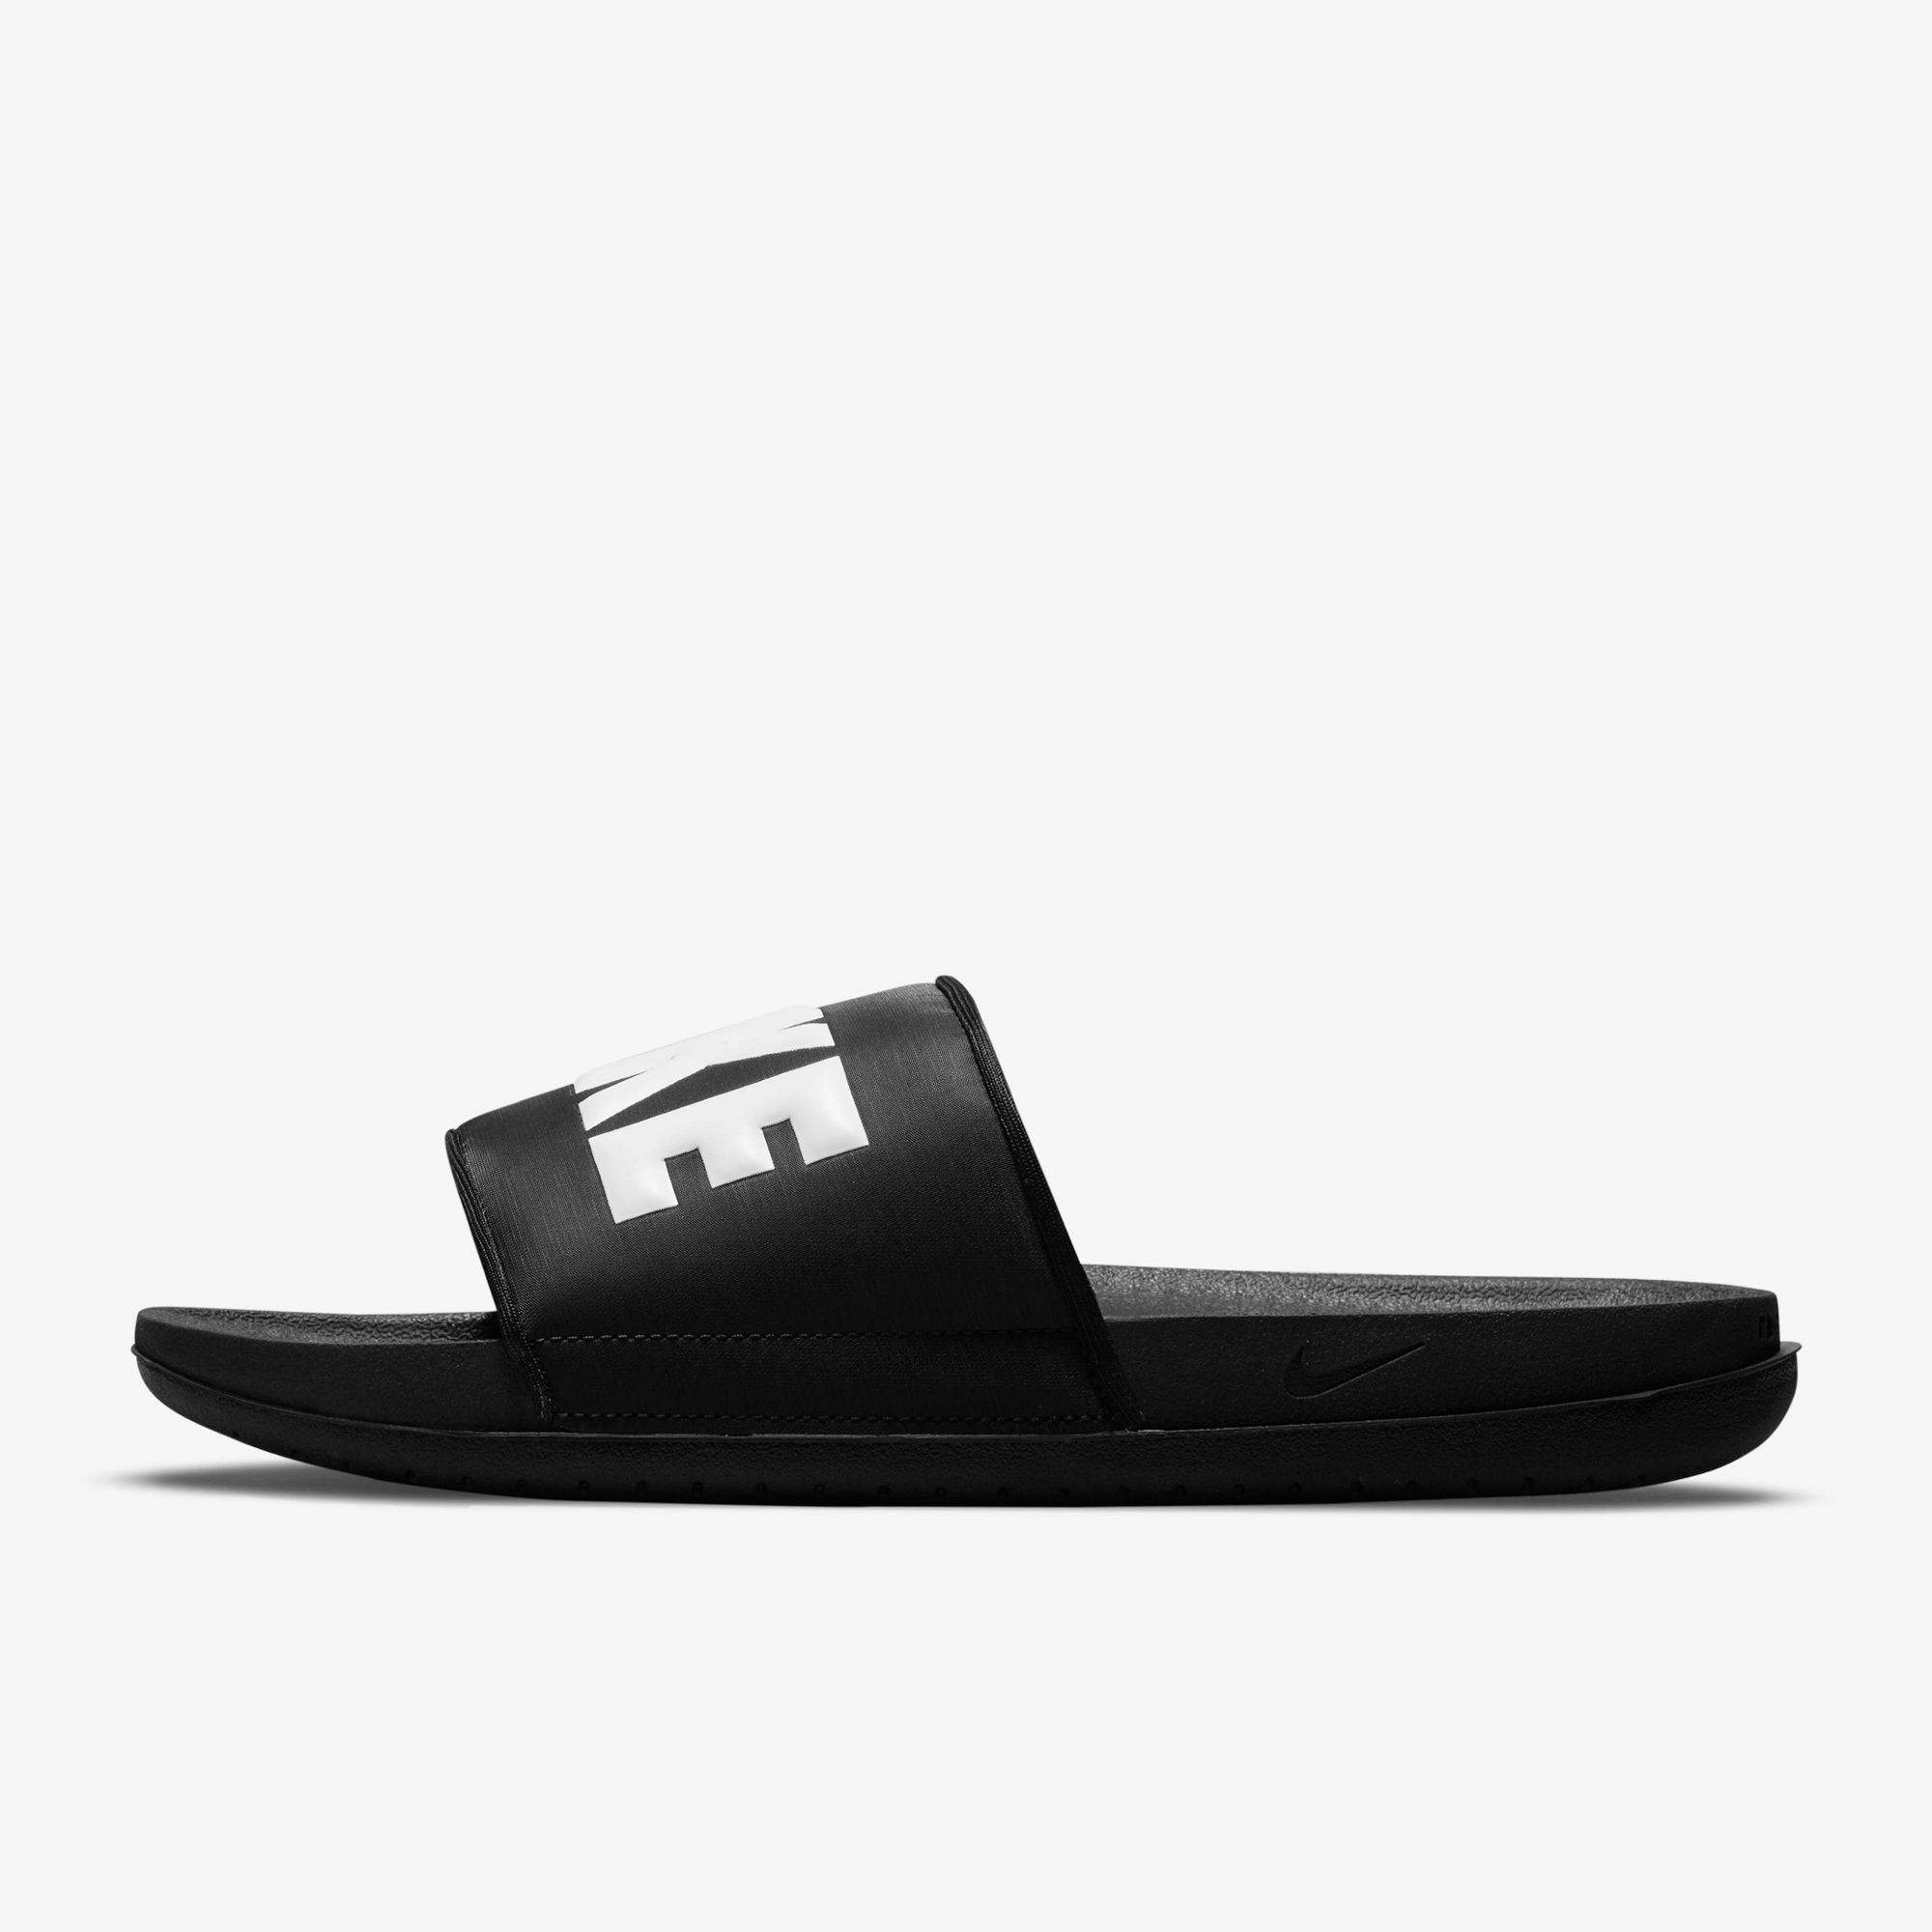  Nike Offcourt Slide - Black/White 